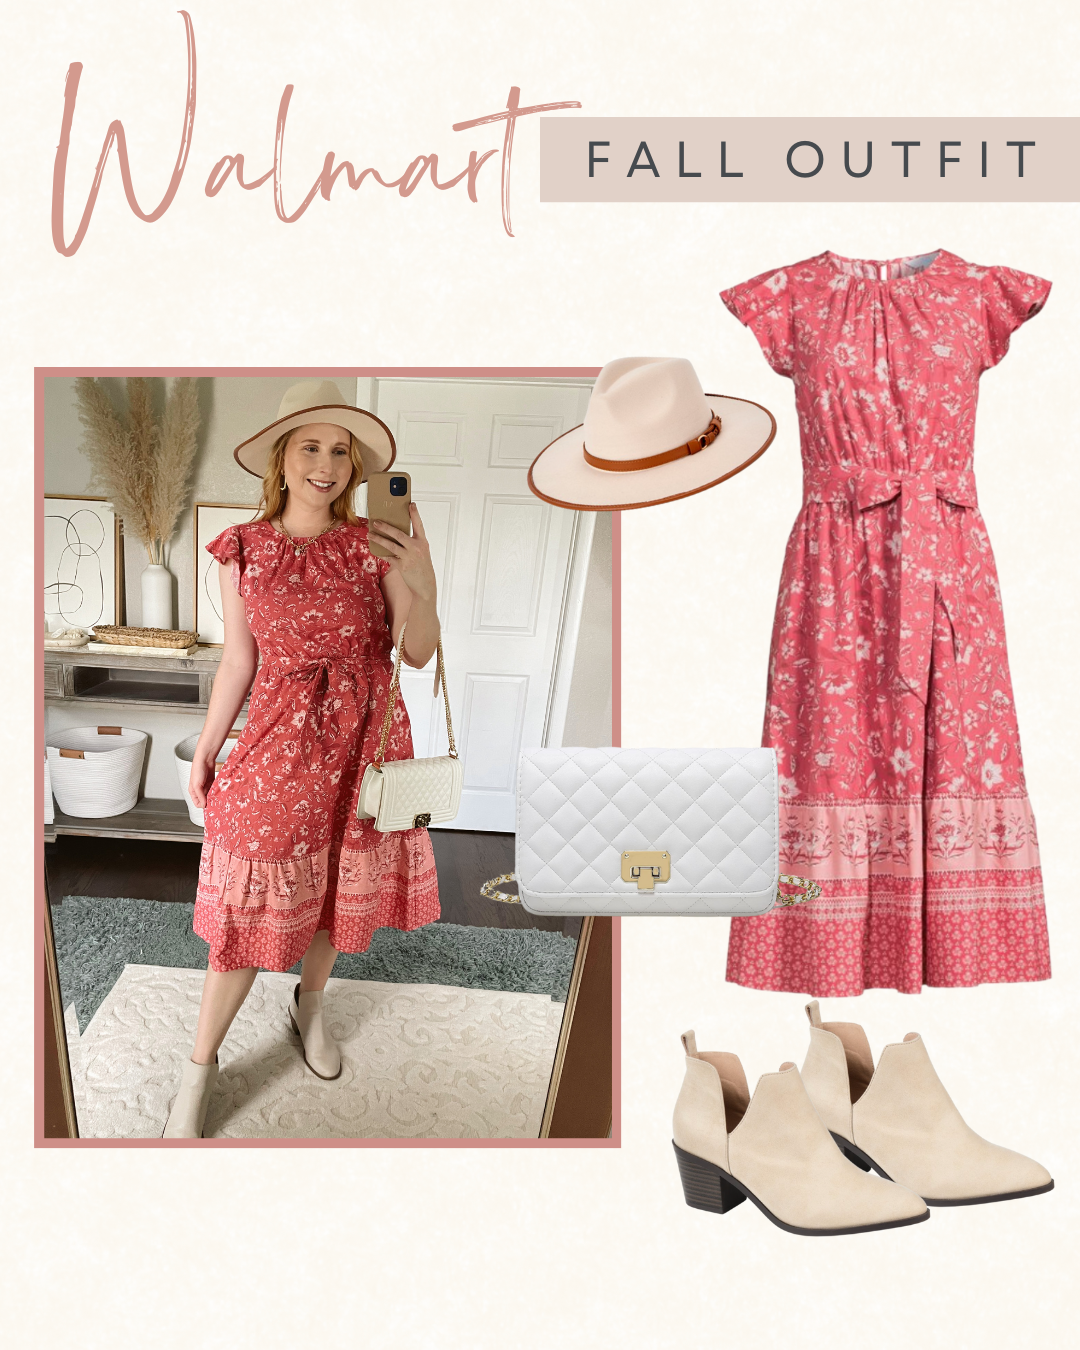 Walmart Outfit Ideas 2022 | Fall Outfits for Women Walmart | Women's Fall Clothing | Best Walmart Finds 2022